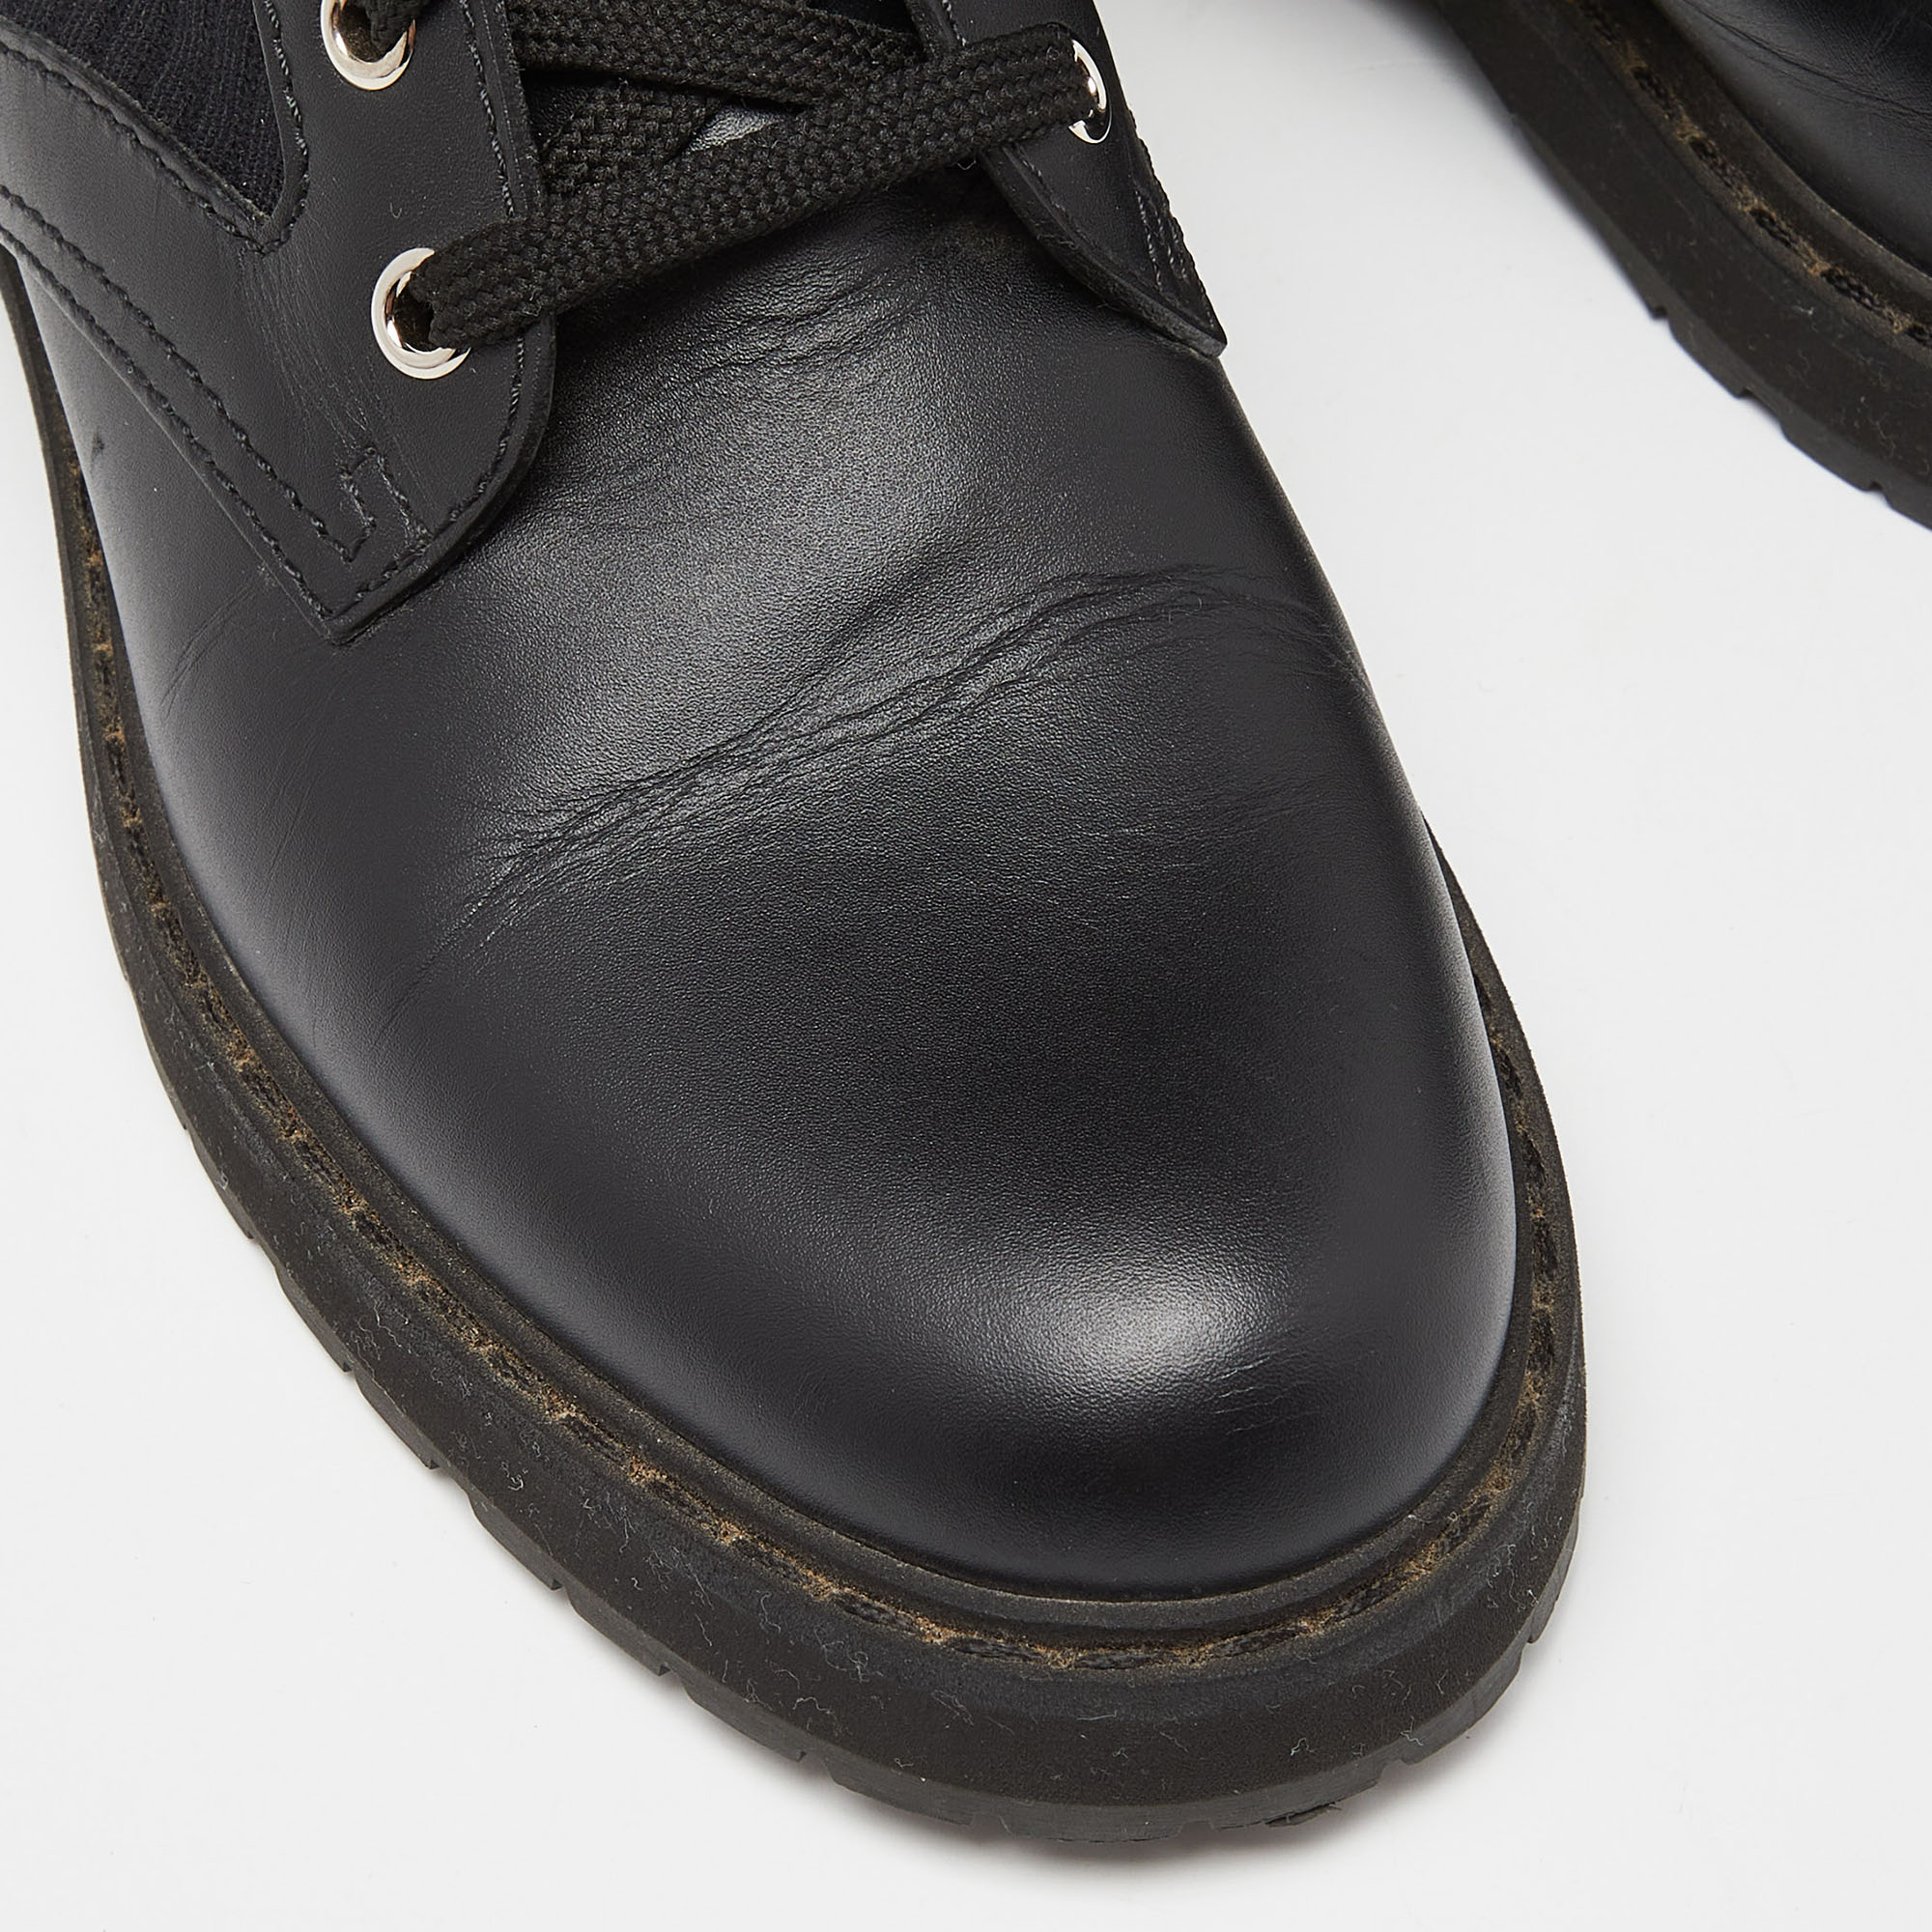 Fendi Black Leather And Zucca Stretch Fabric Rockoko Combat Boots Size 38